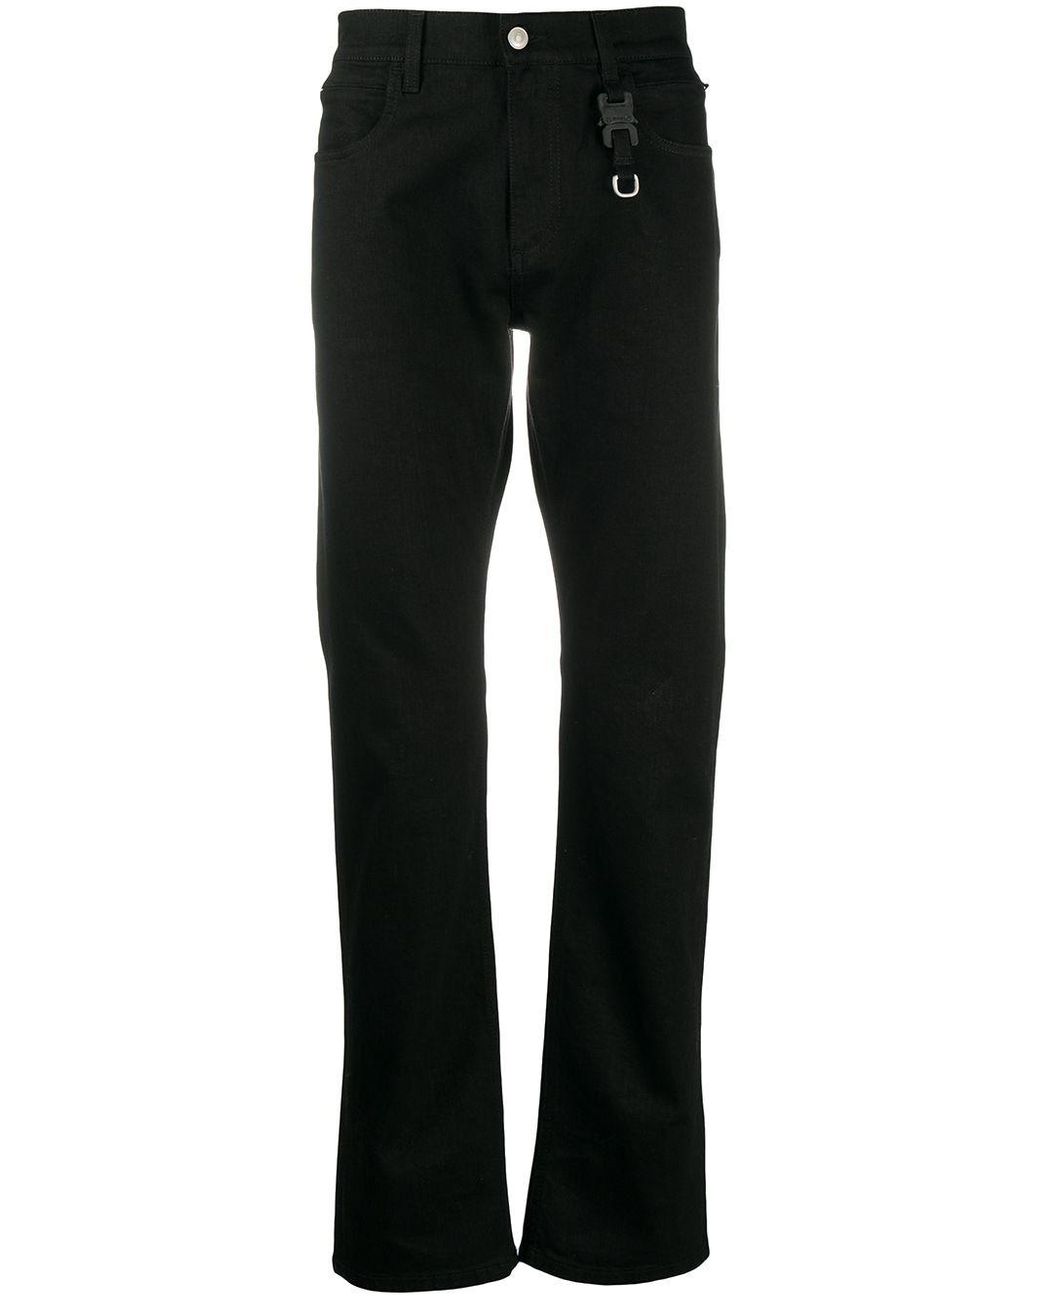 1017 ALYX 9SM Cotton Jeans in Black for Men - Lyst